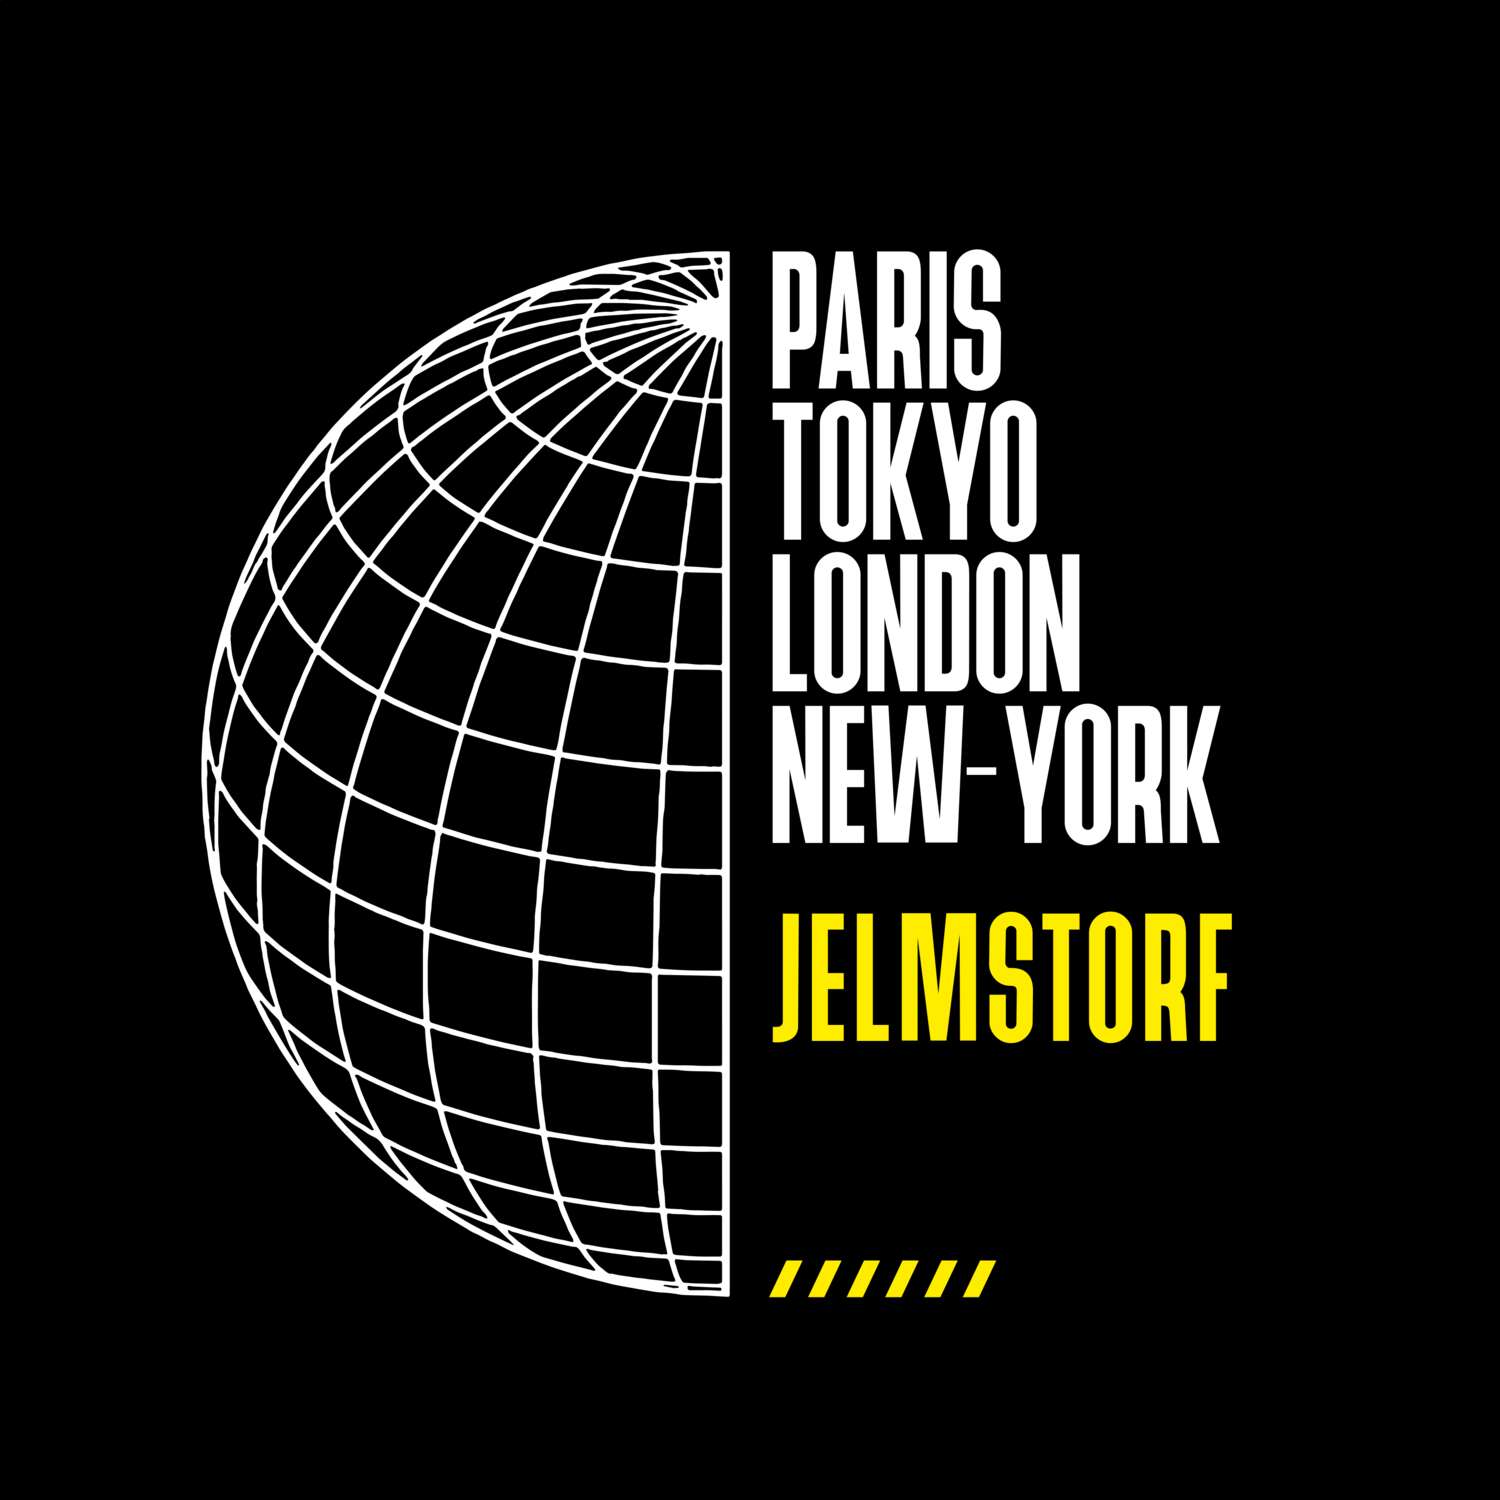 Jelmstorf T-Shirt »Paris Tokyo London«